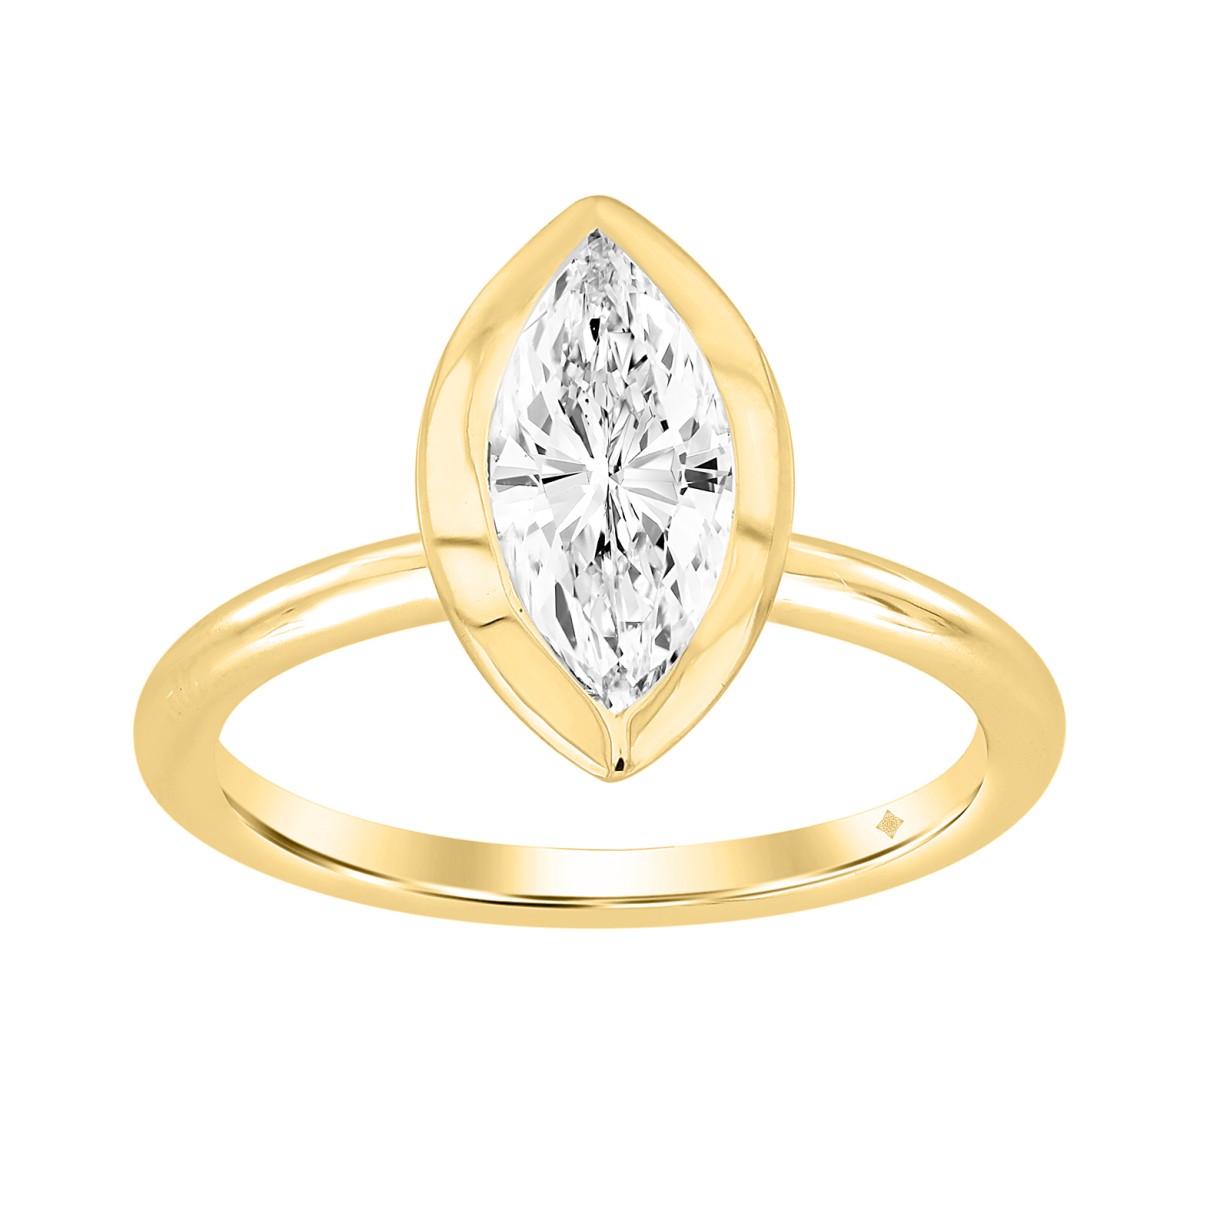 LADIES RING 3CT MARQUISE DIAMOND 14K YELLOW GOLD (CENTER STONE MARQUISE DIAMOND 3CT )